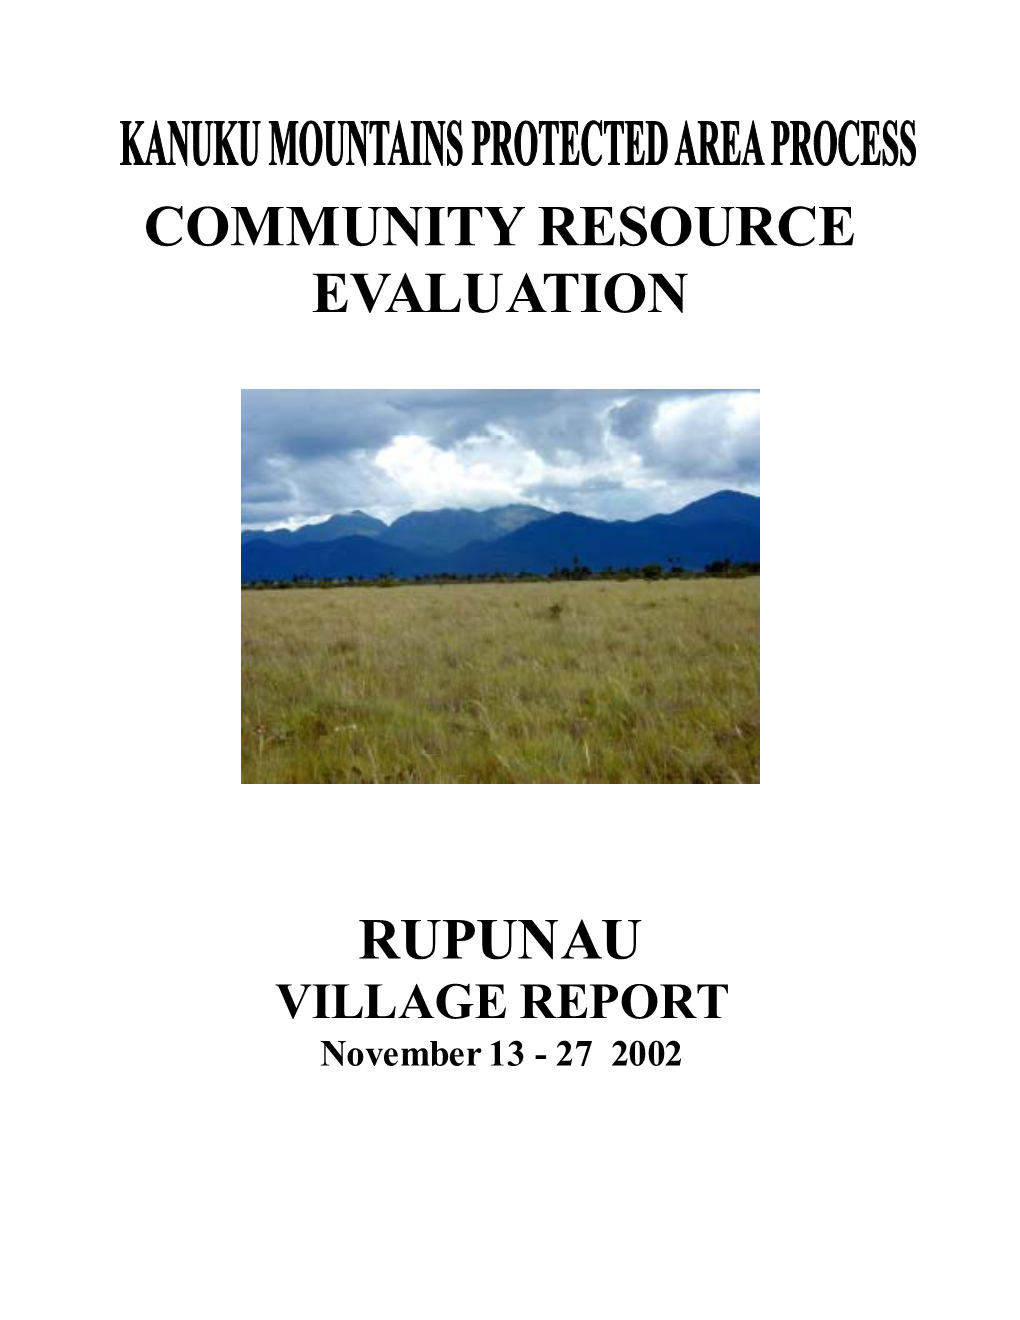 Rupunau Community Resource Evaluation